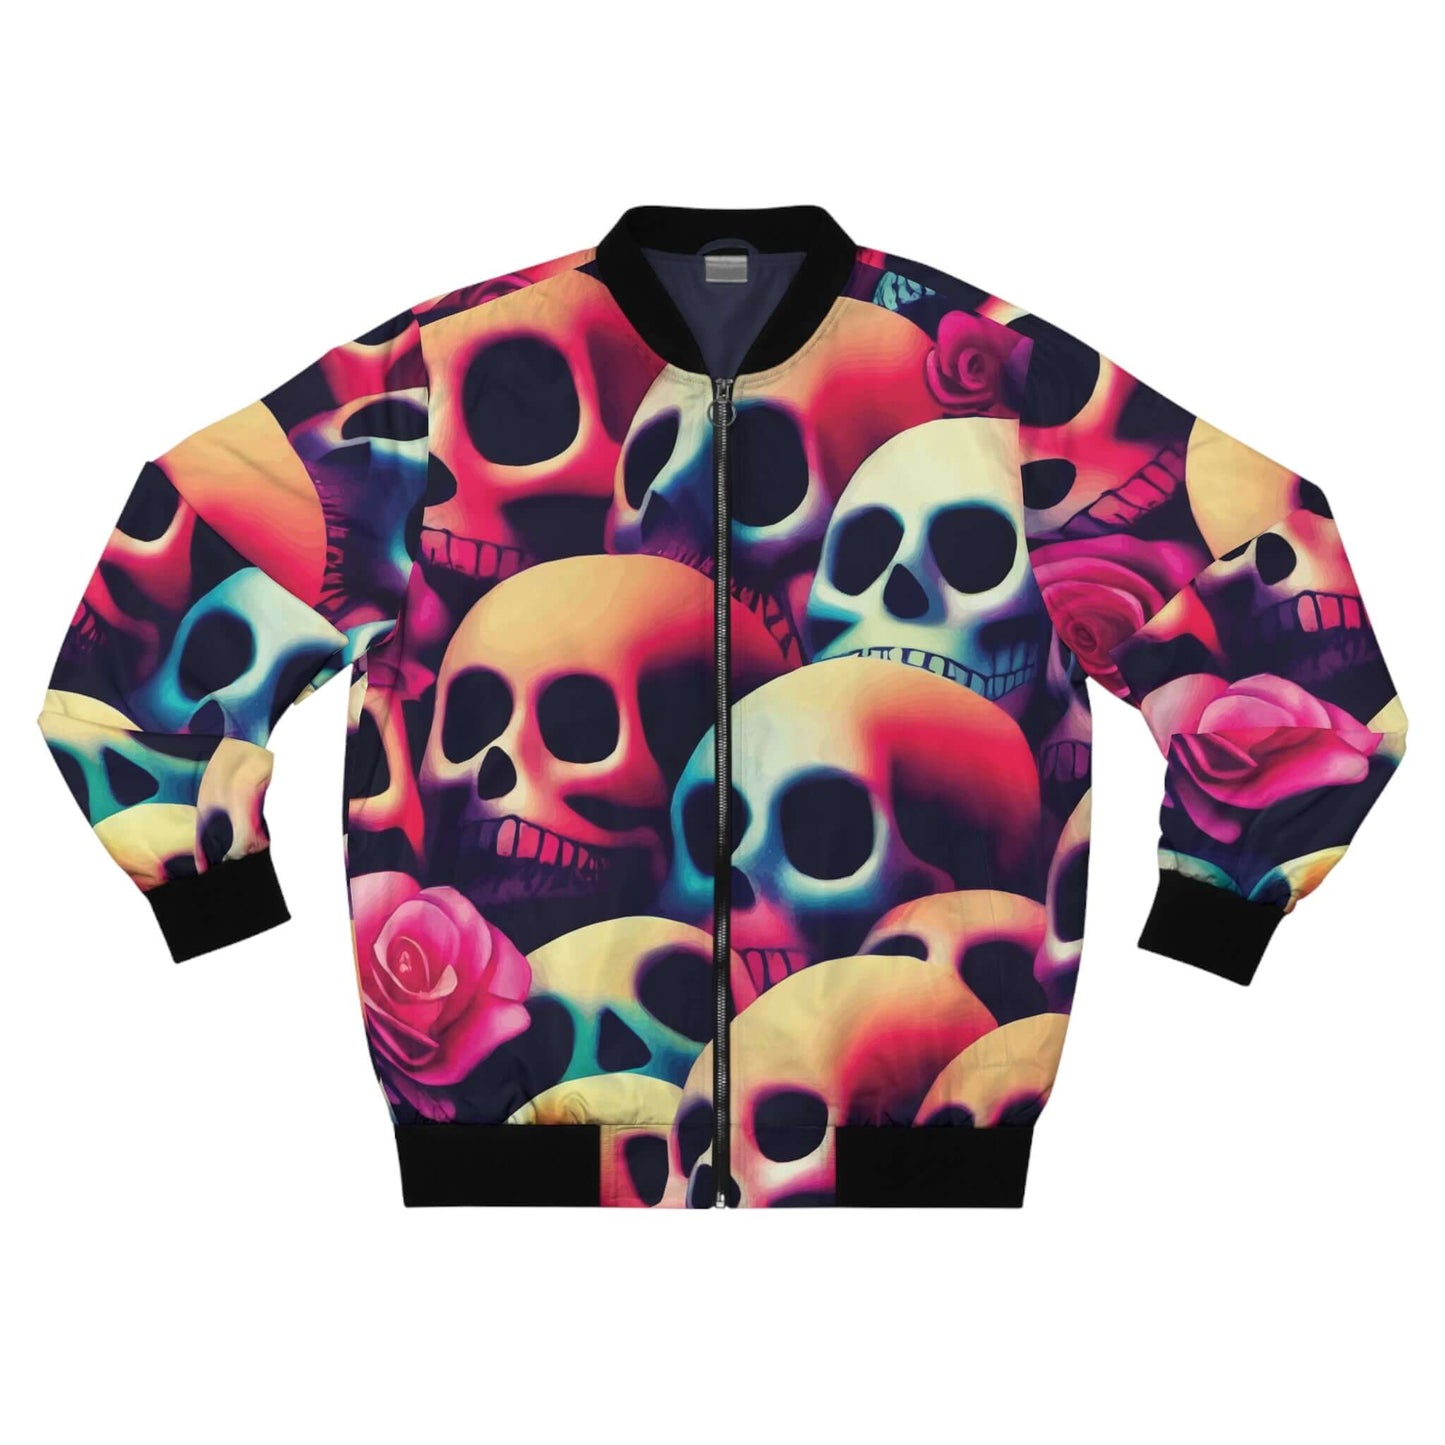 Skulls & Roses Bomber Jacket